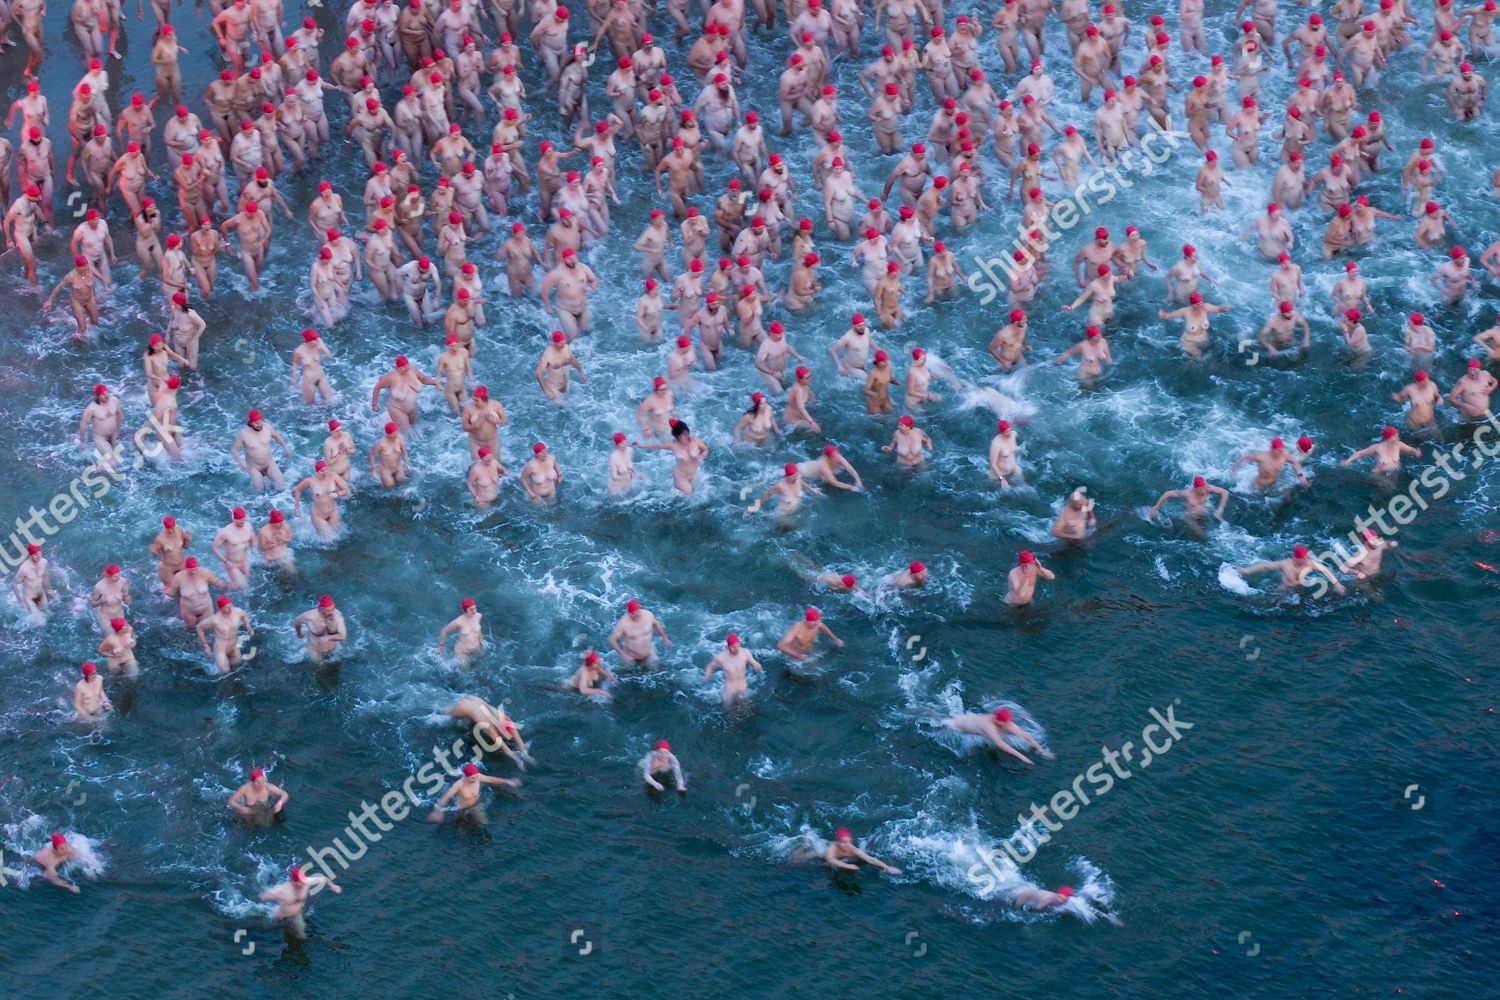 Dark Mofo skinny dip sees almost 700 nude swimmers brave 